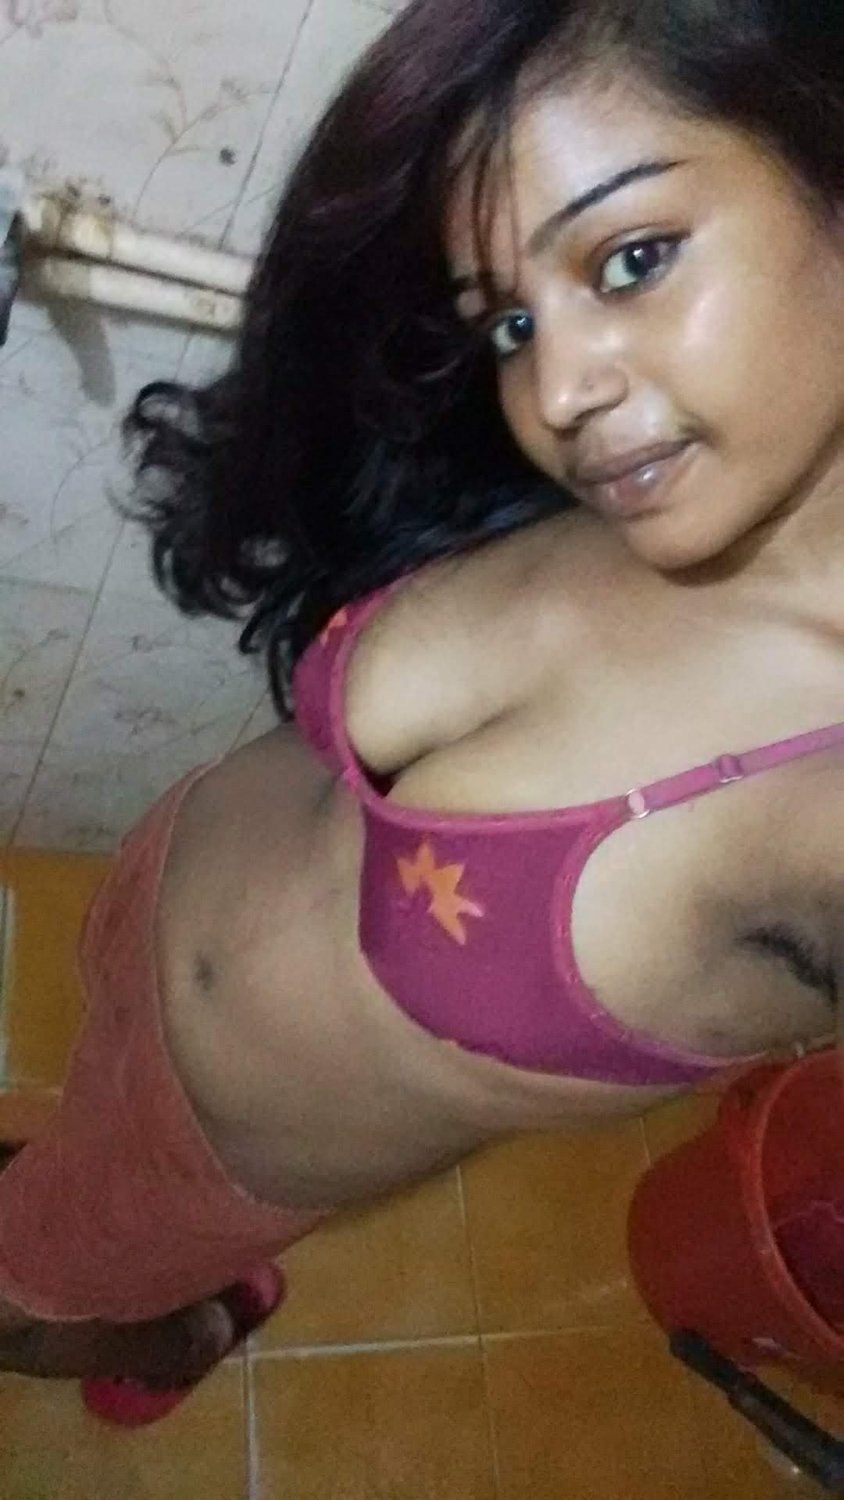 Indian birthday girl sending nudes